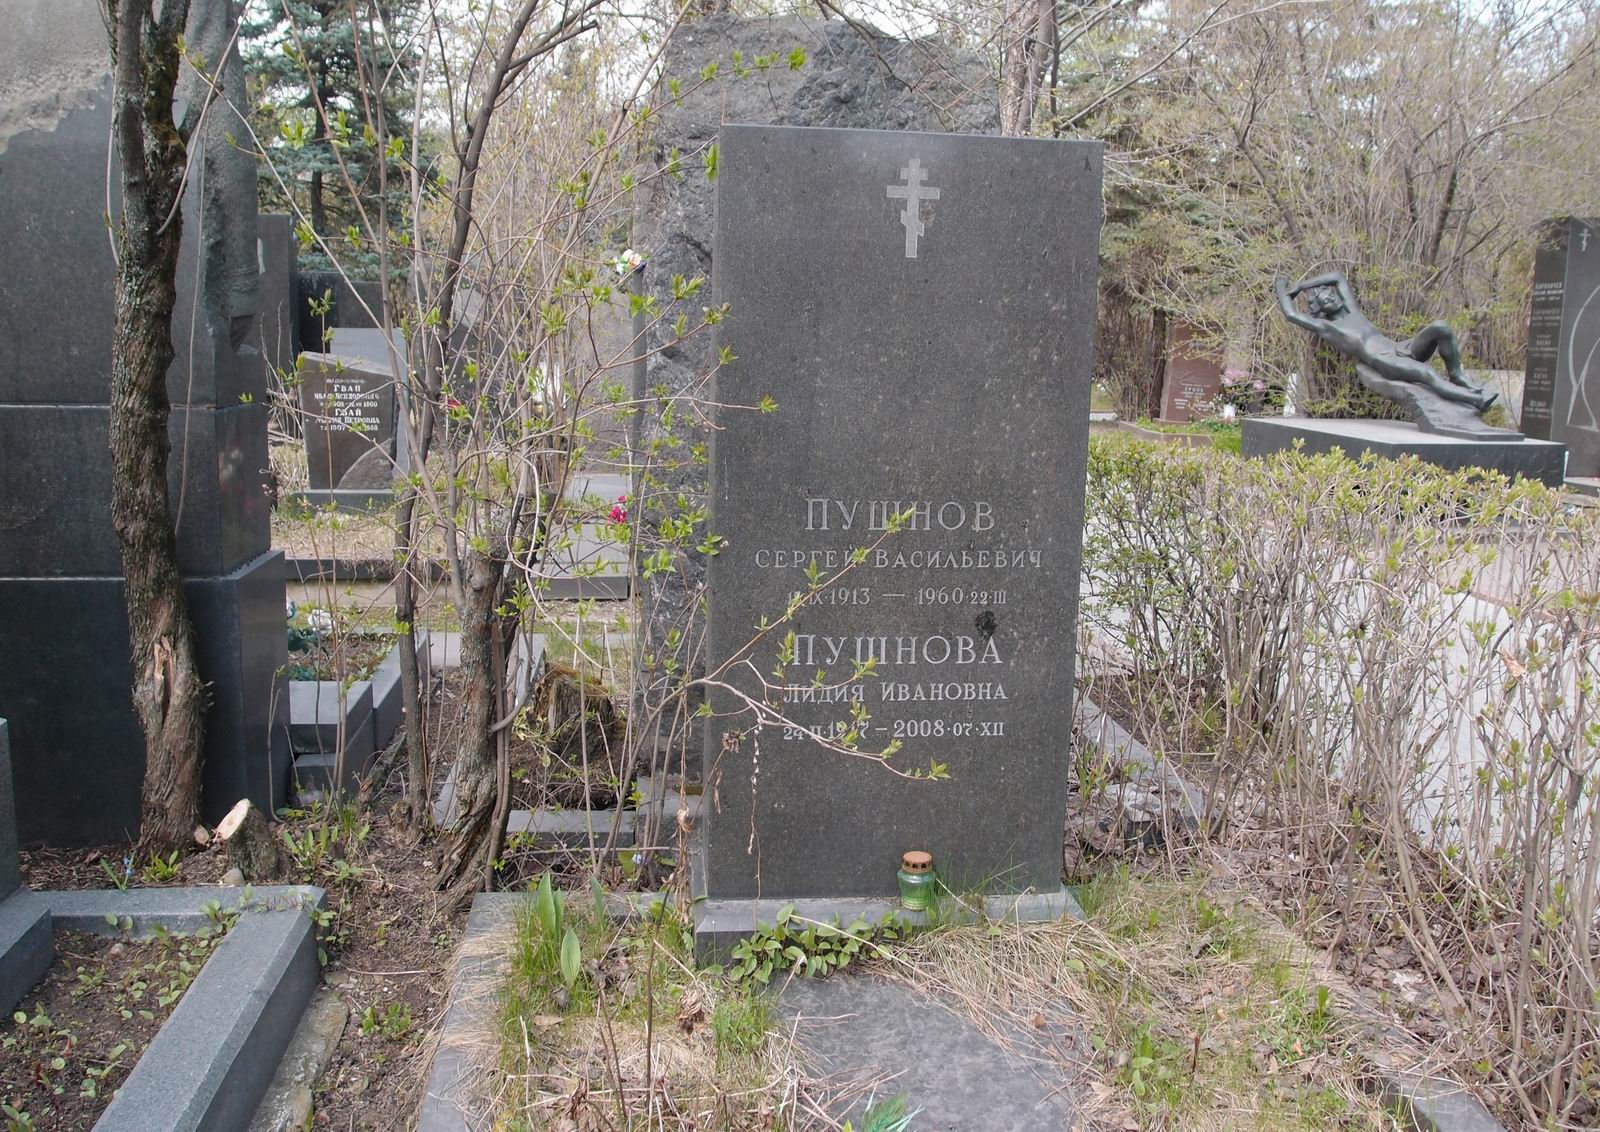 Памятник на могиле Пушнова С.В. (1913-1960), на Новодевичьем кладбище (8-3-1).